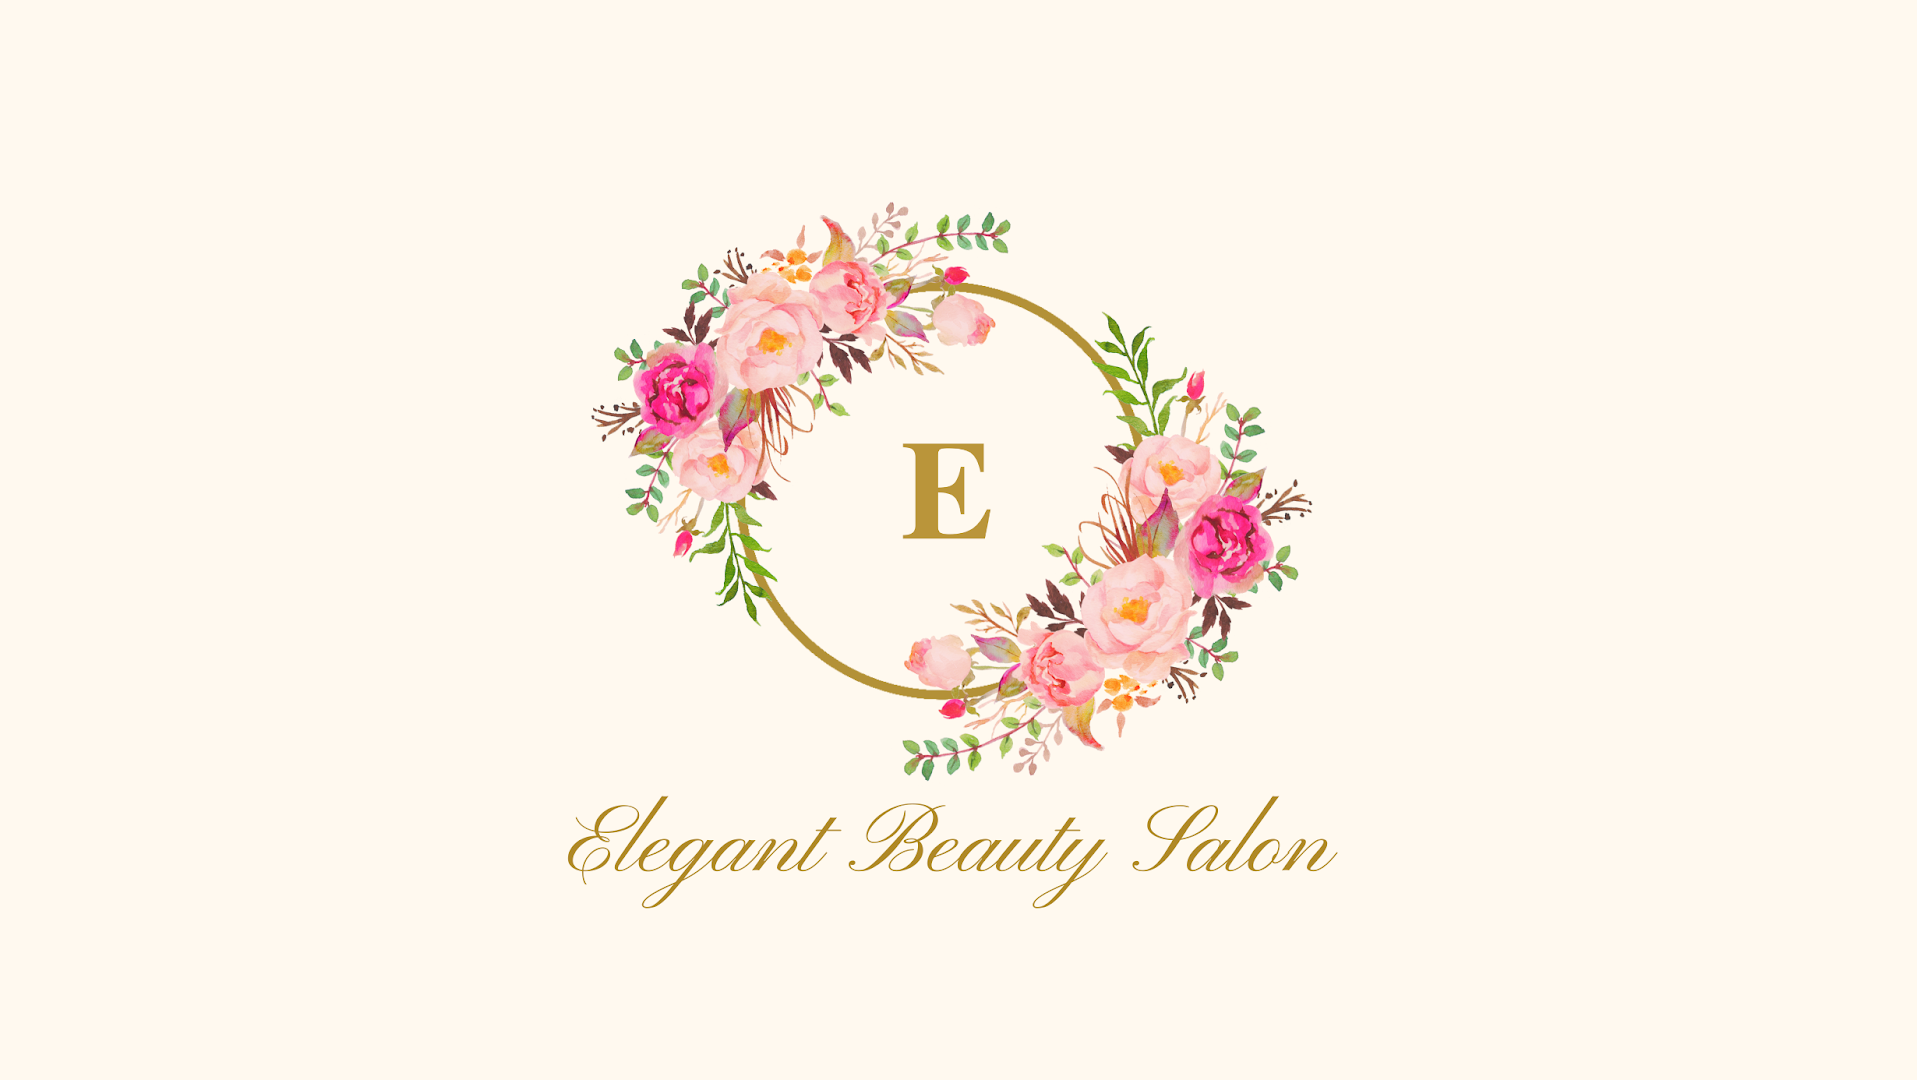 Elegant Beauty Salon